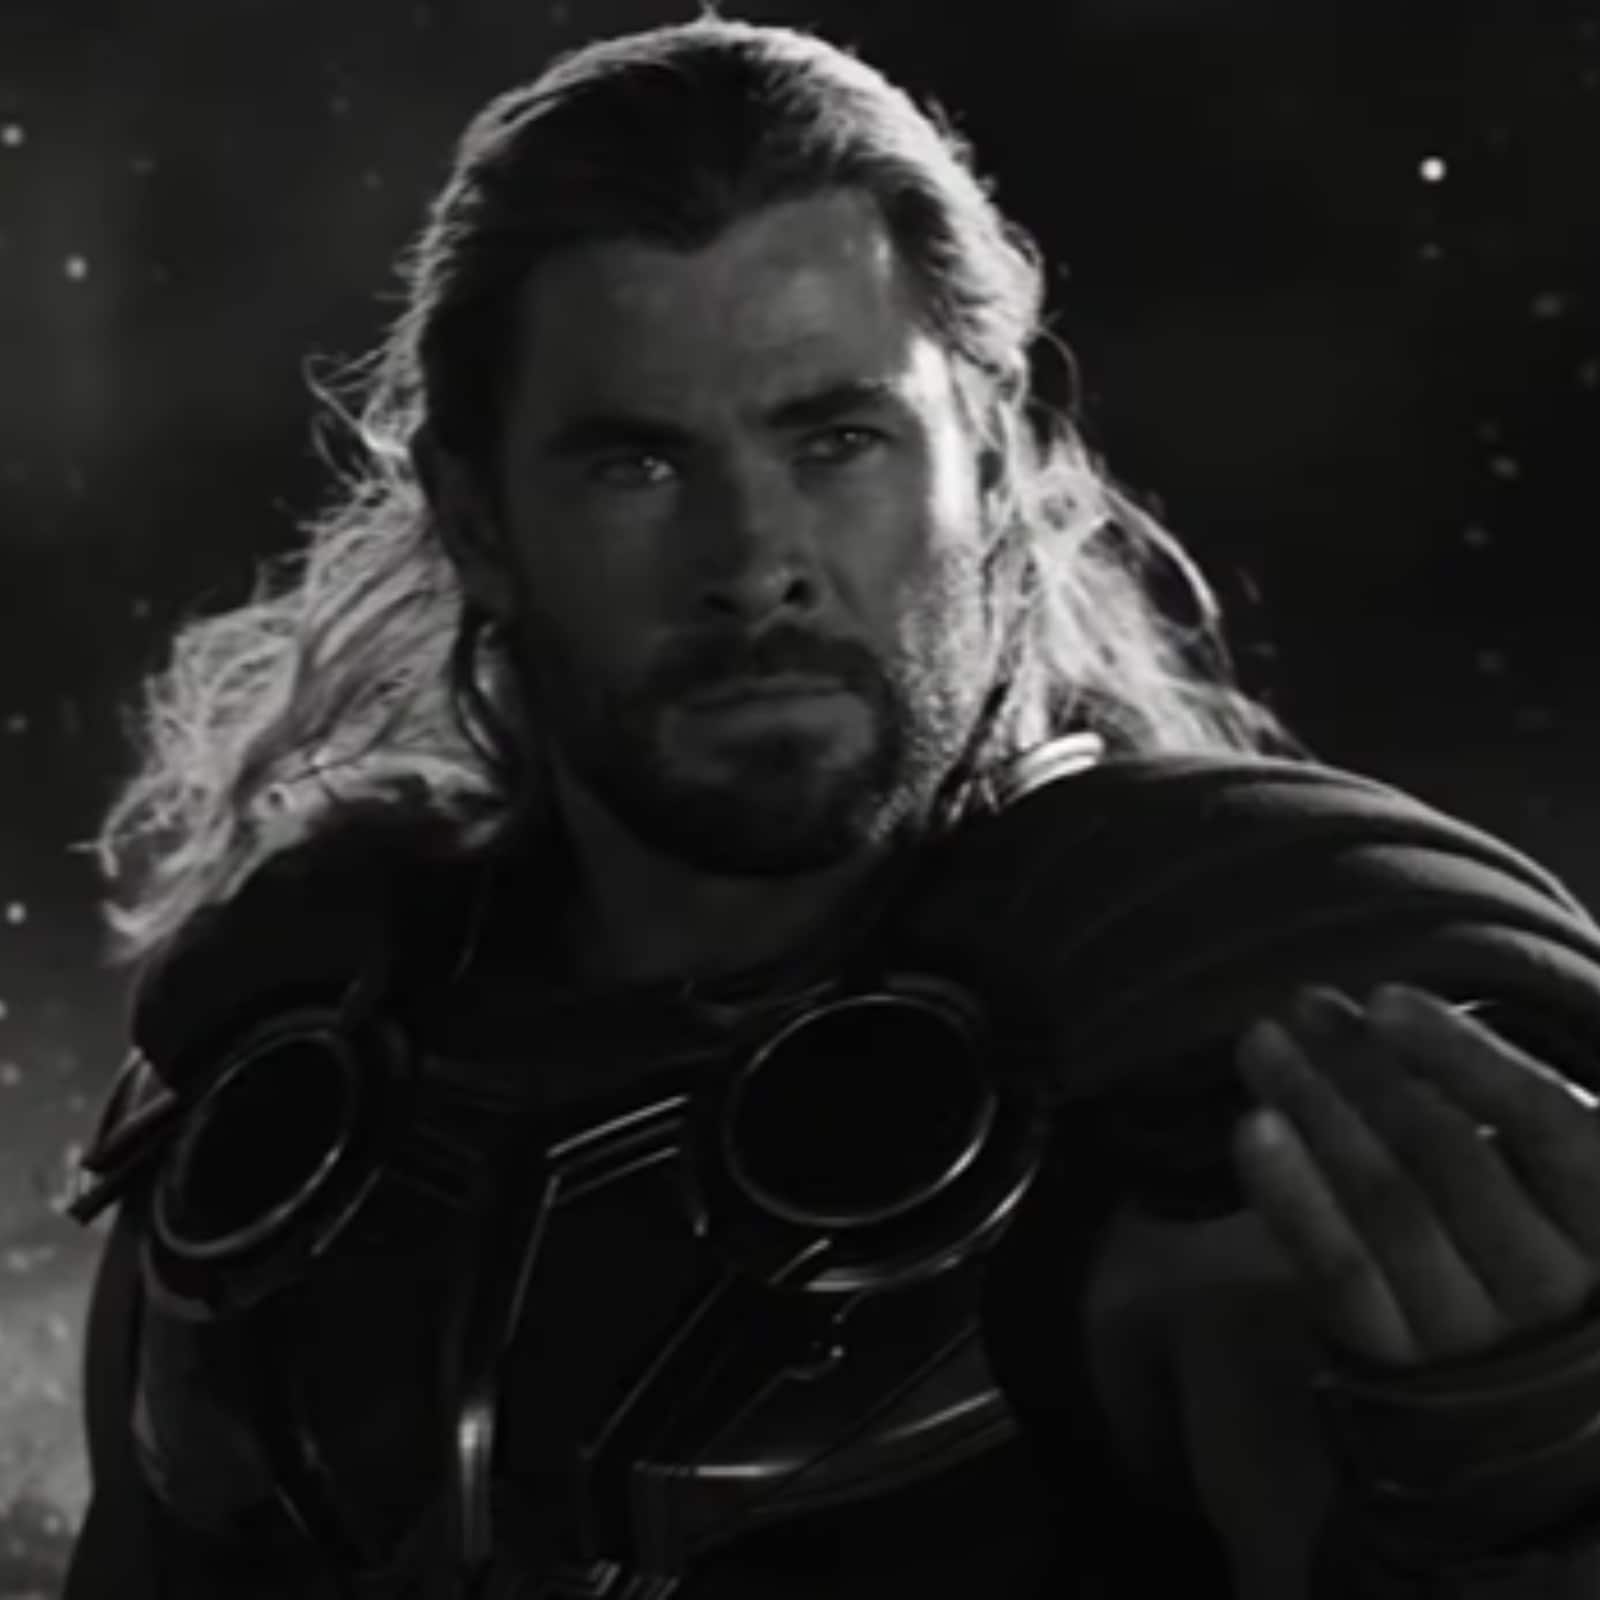 Thor & Gorr Clash In Epic Love & Thunder Trailer